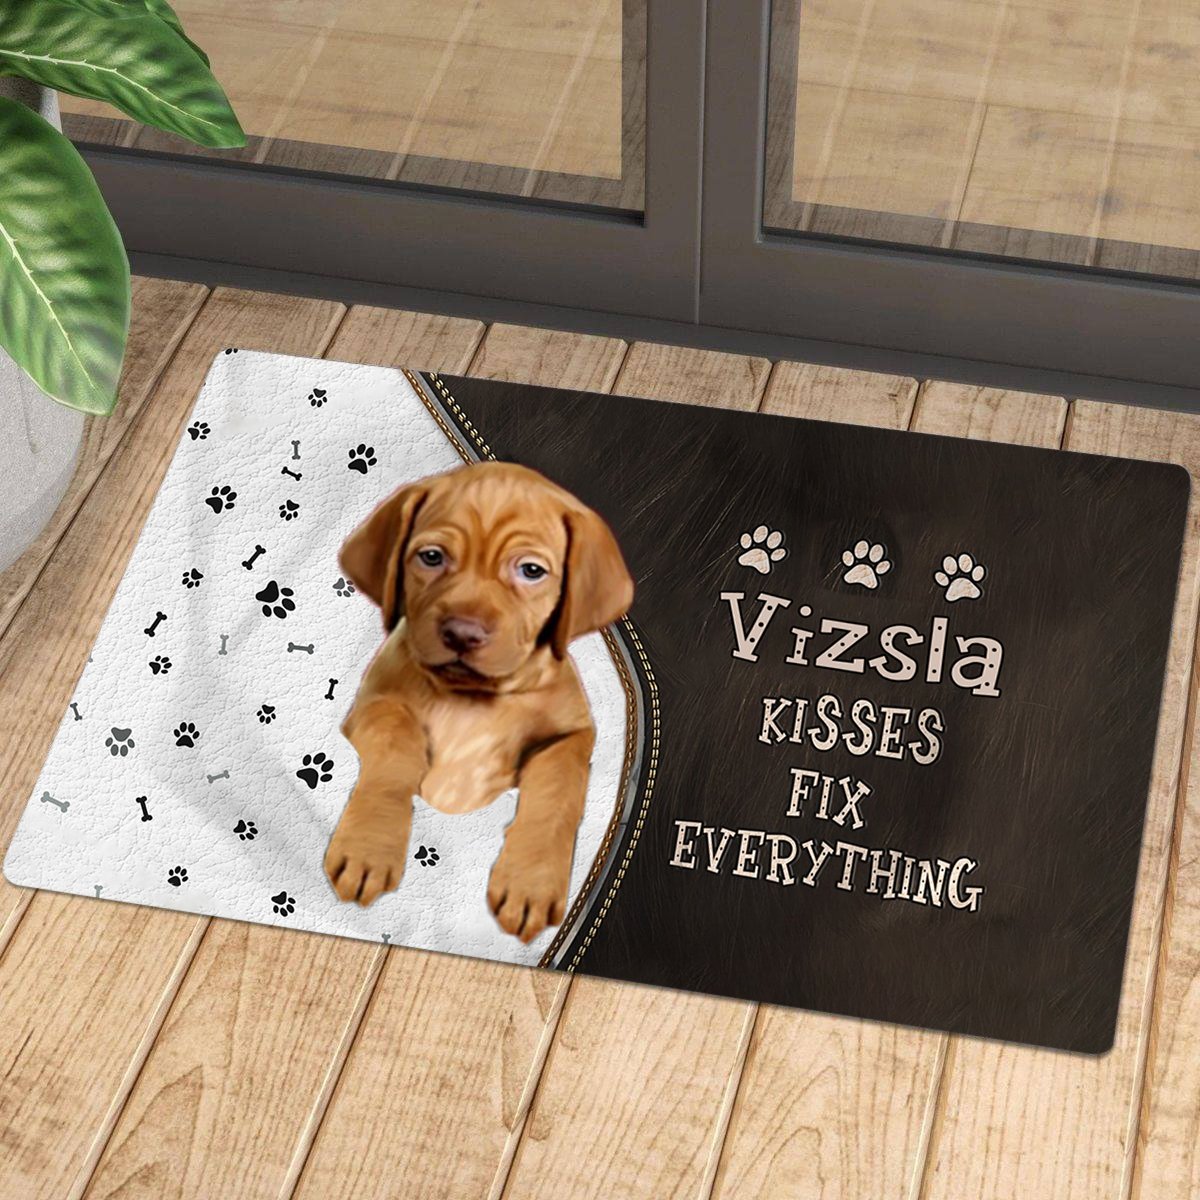 Vizsla Kisses Fix Everything Doormat